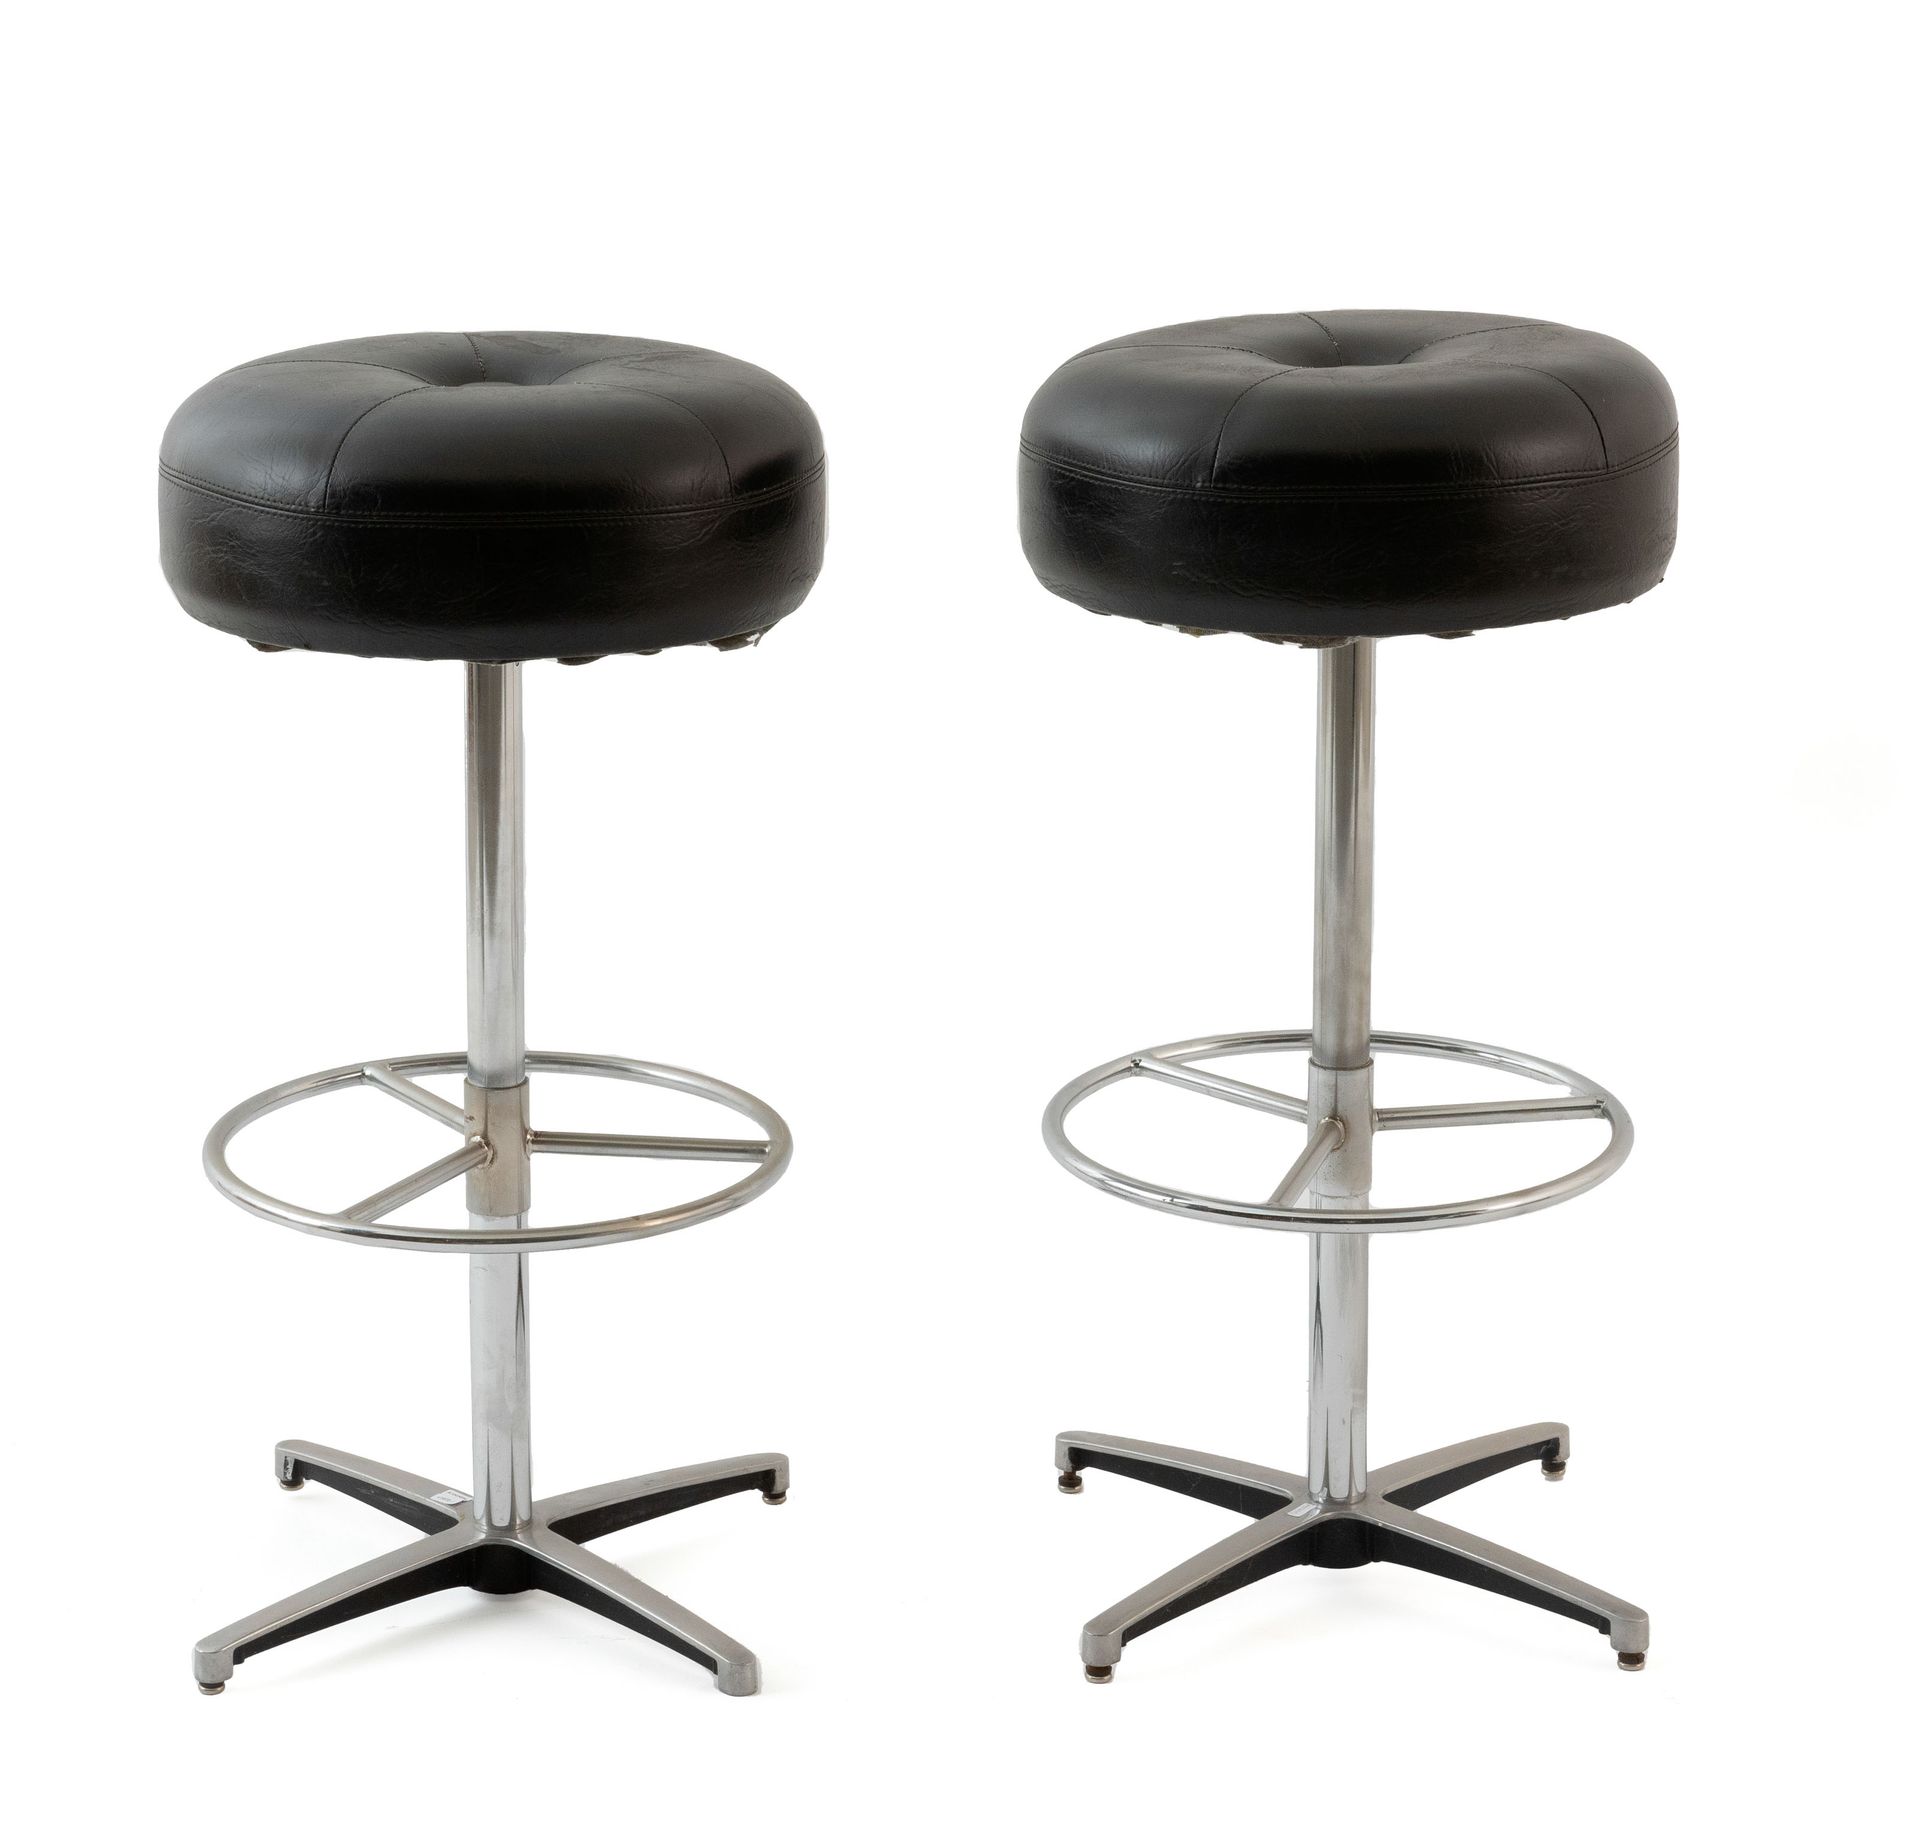 ANONIEM / ANONYME XX 一对酒吧凳子。约1970年。圆形座椅覆盖着黑色乙烯基。十字形腿。

88 x 45 cm